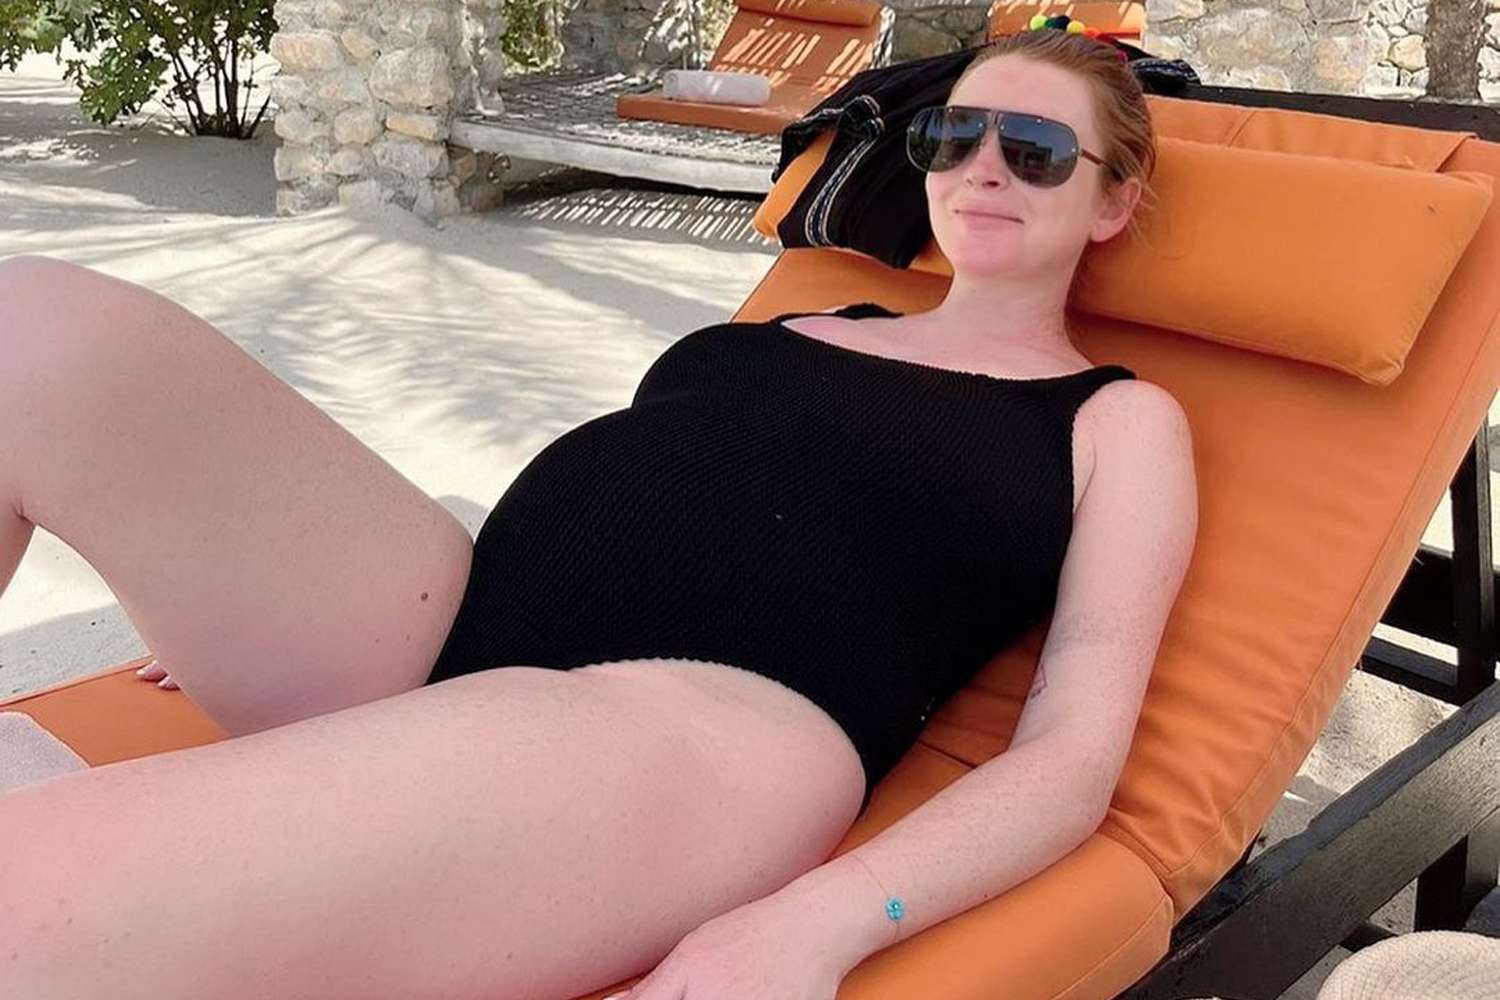 Lindsay Lohan gives birth to first baby boy Luai | EW.com